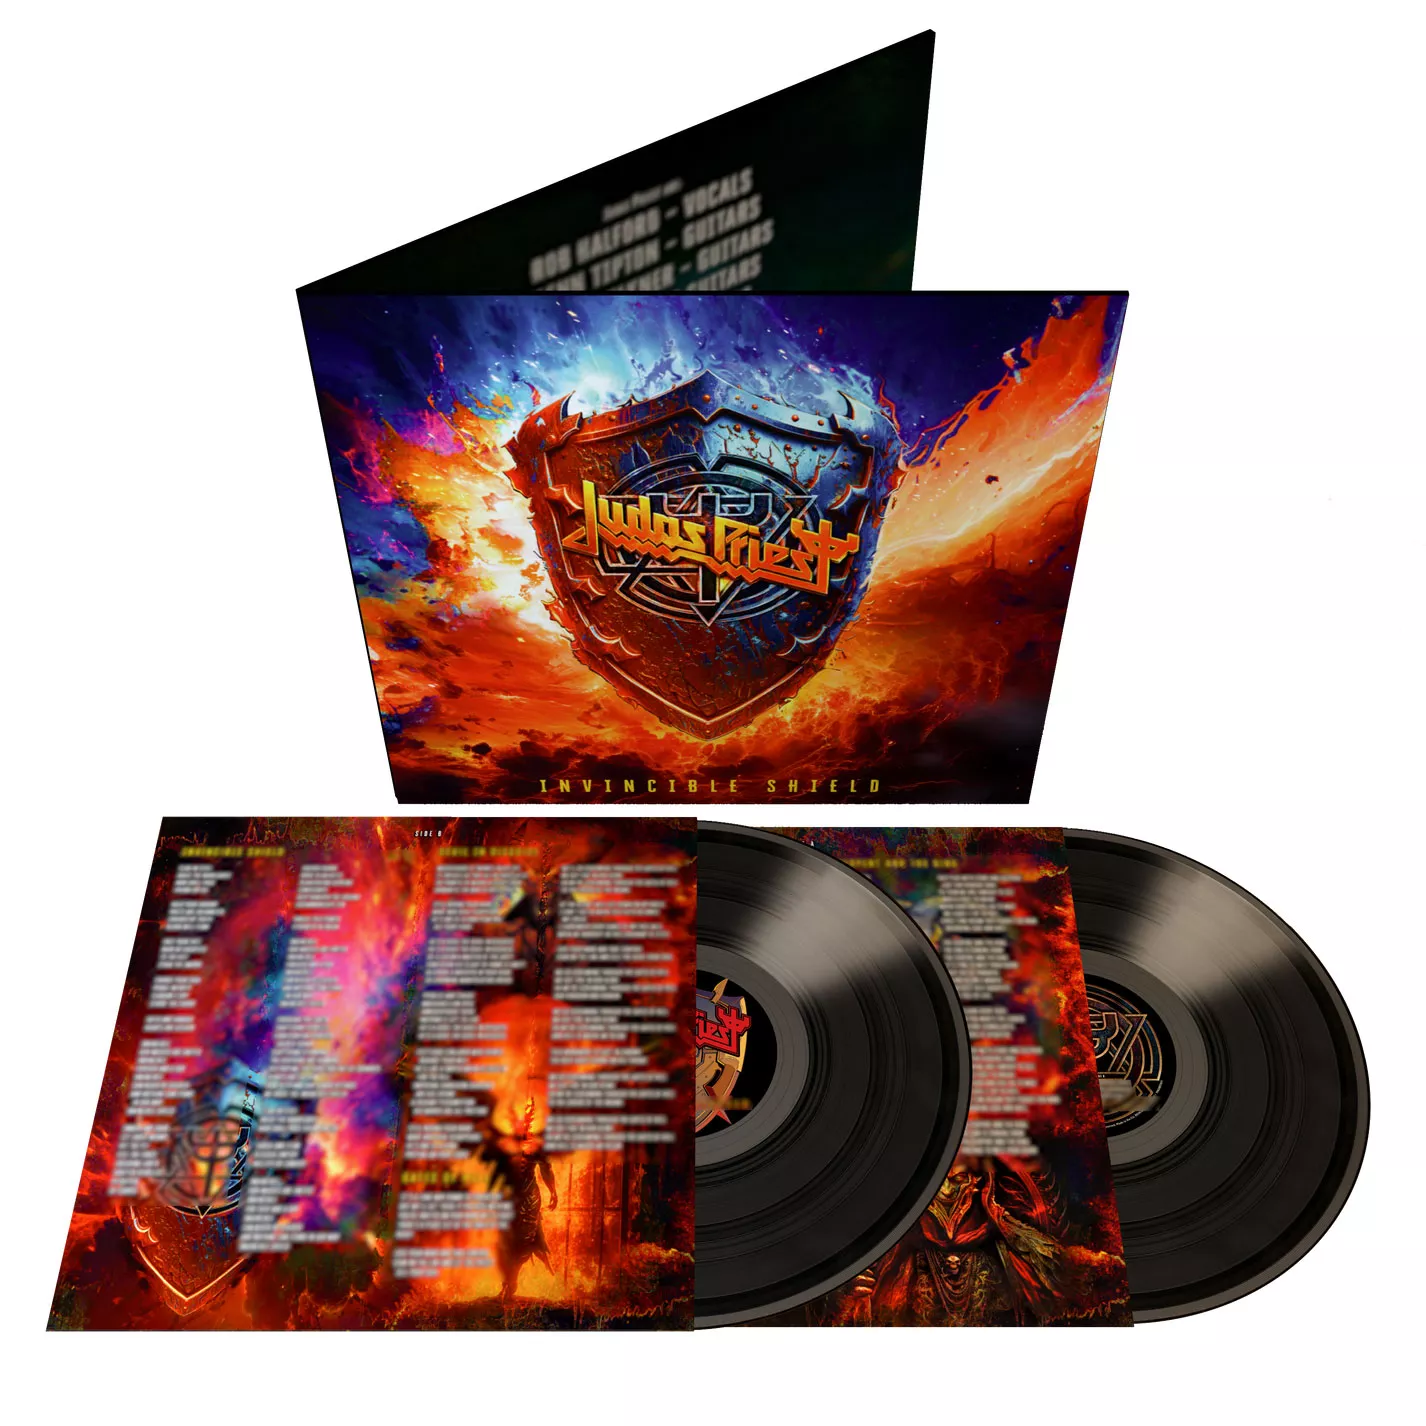 Judas Priest объявили предзаказ нового альбома Invincible Shield